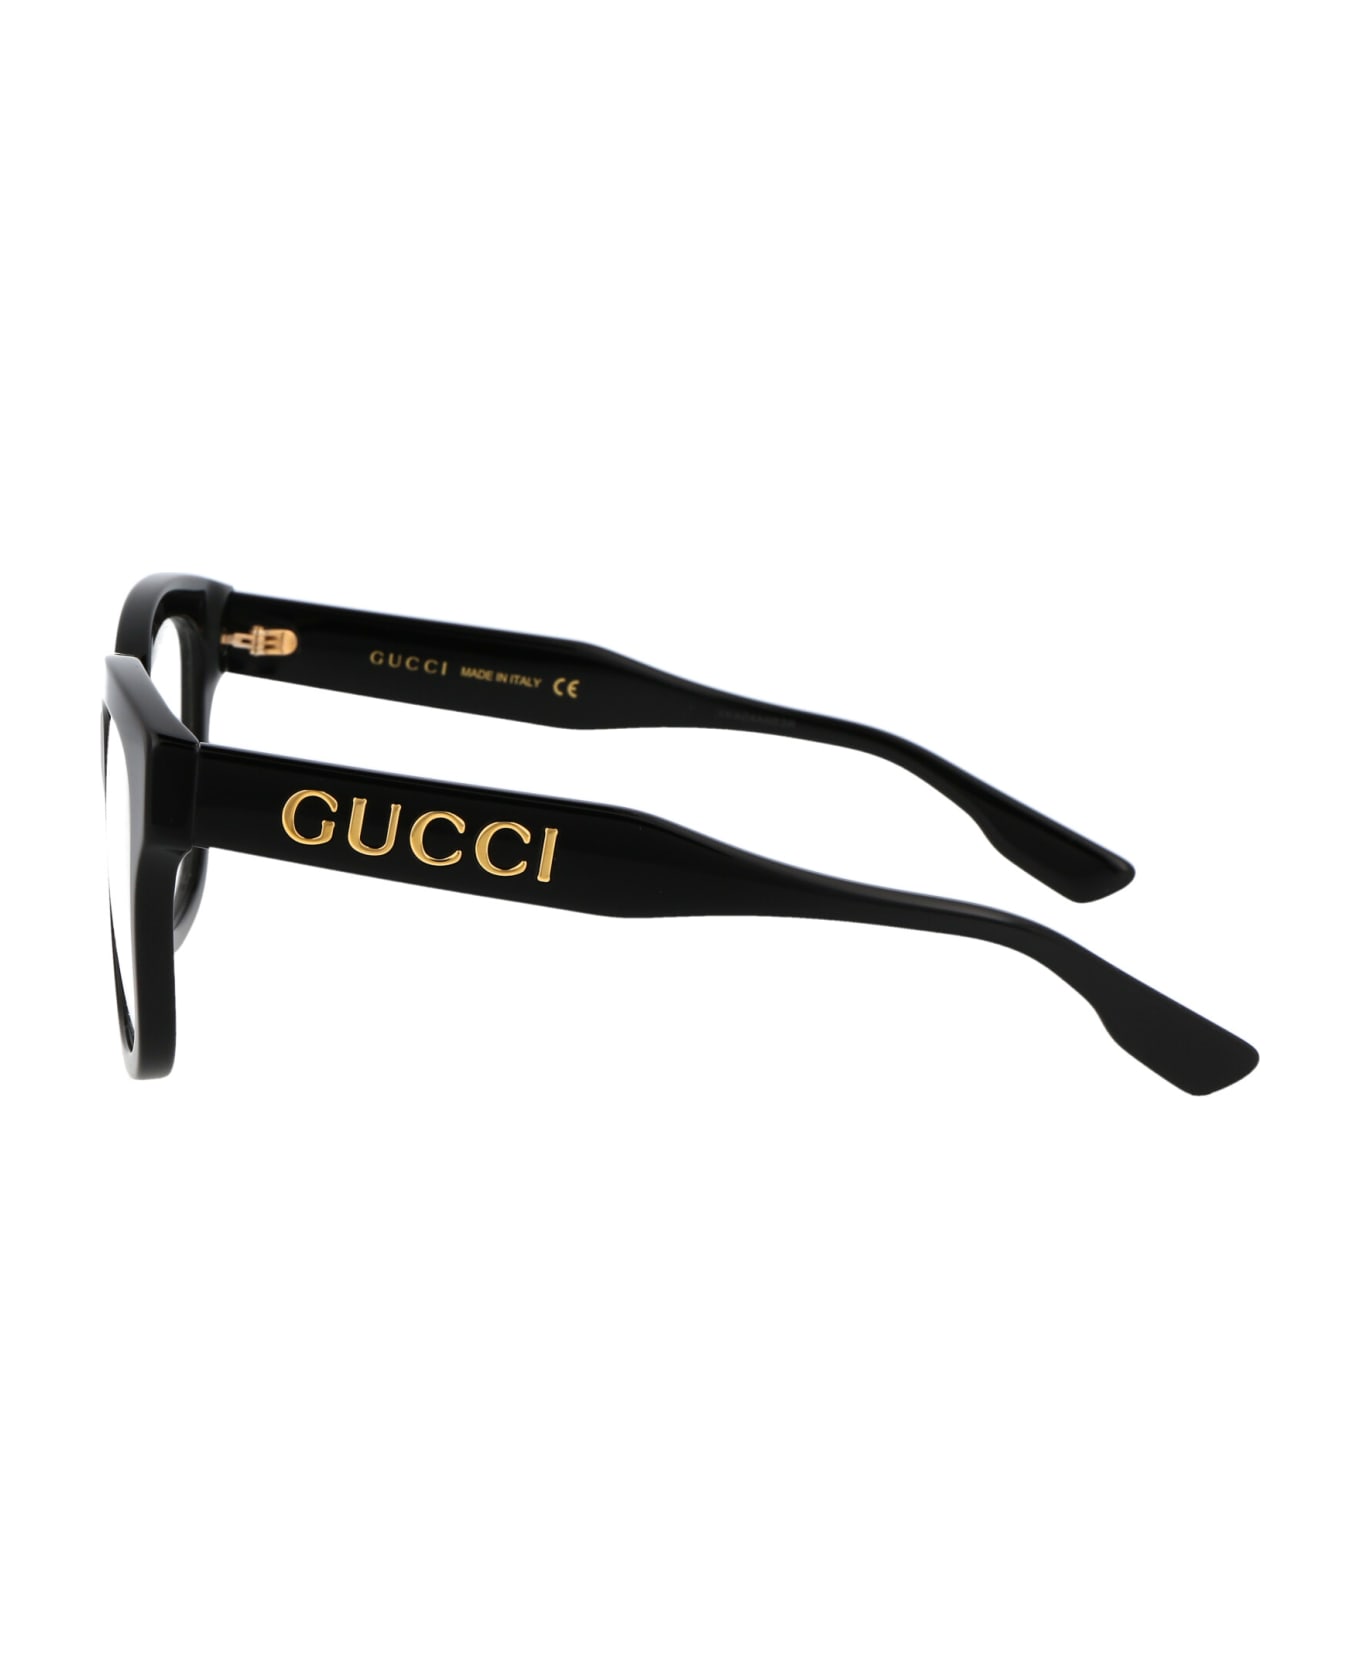 Gucci Eyewear Gg1155o Glasses - 001 BLACK BLACK TRANSPARENT